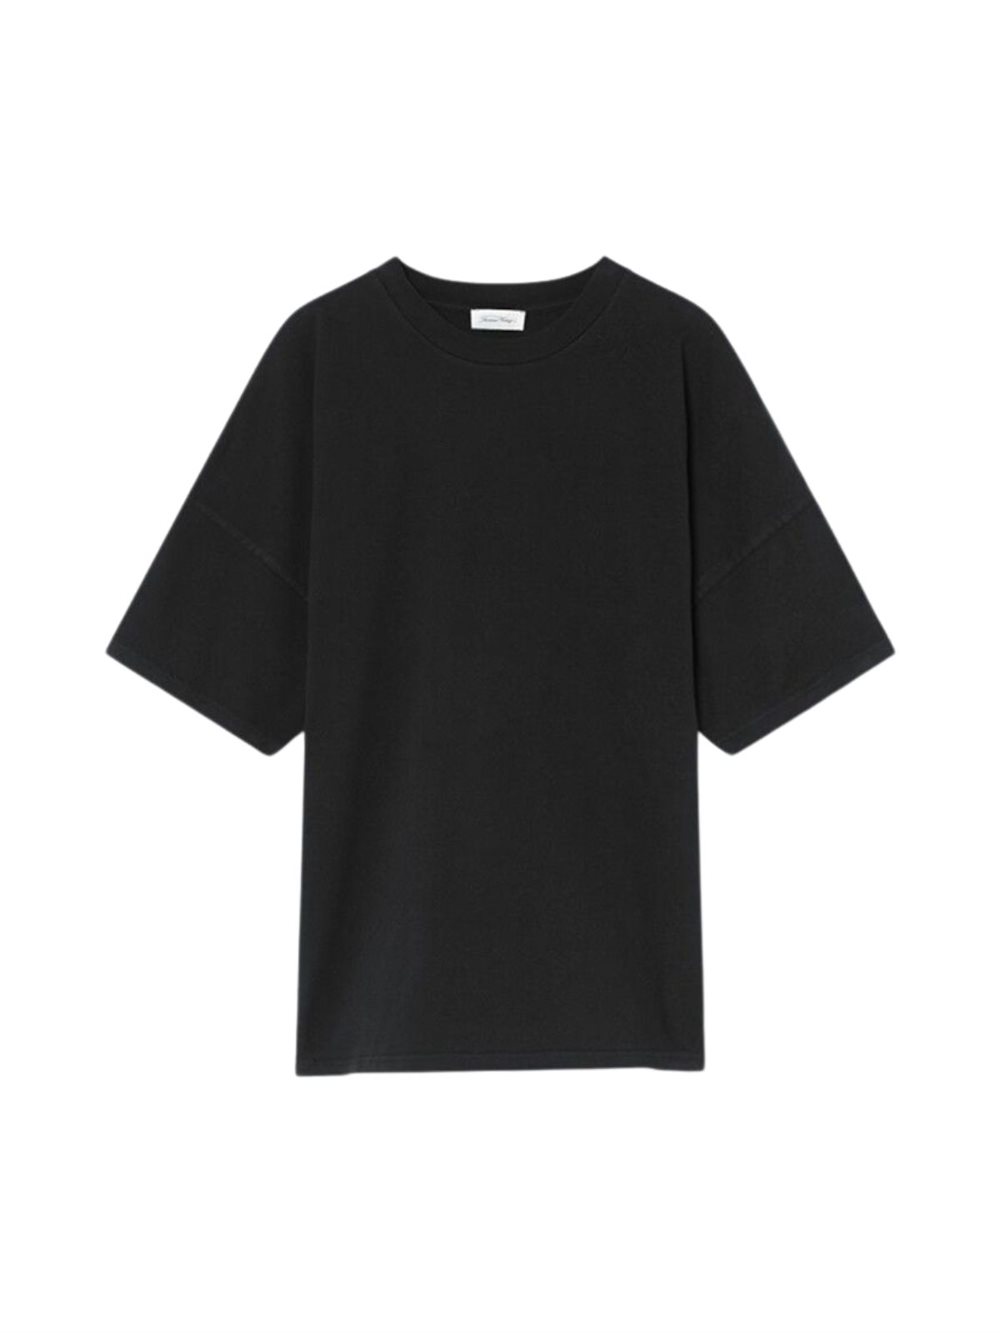 Fizvally T-Shirt Black Unisex